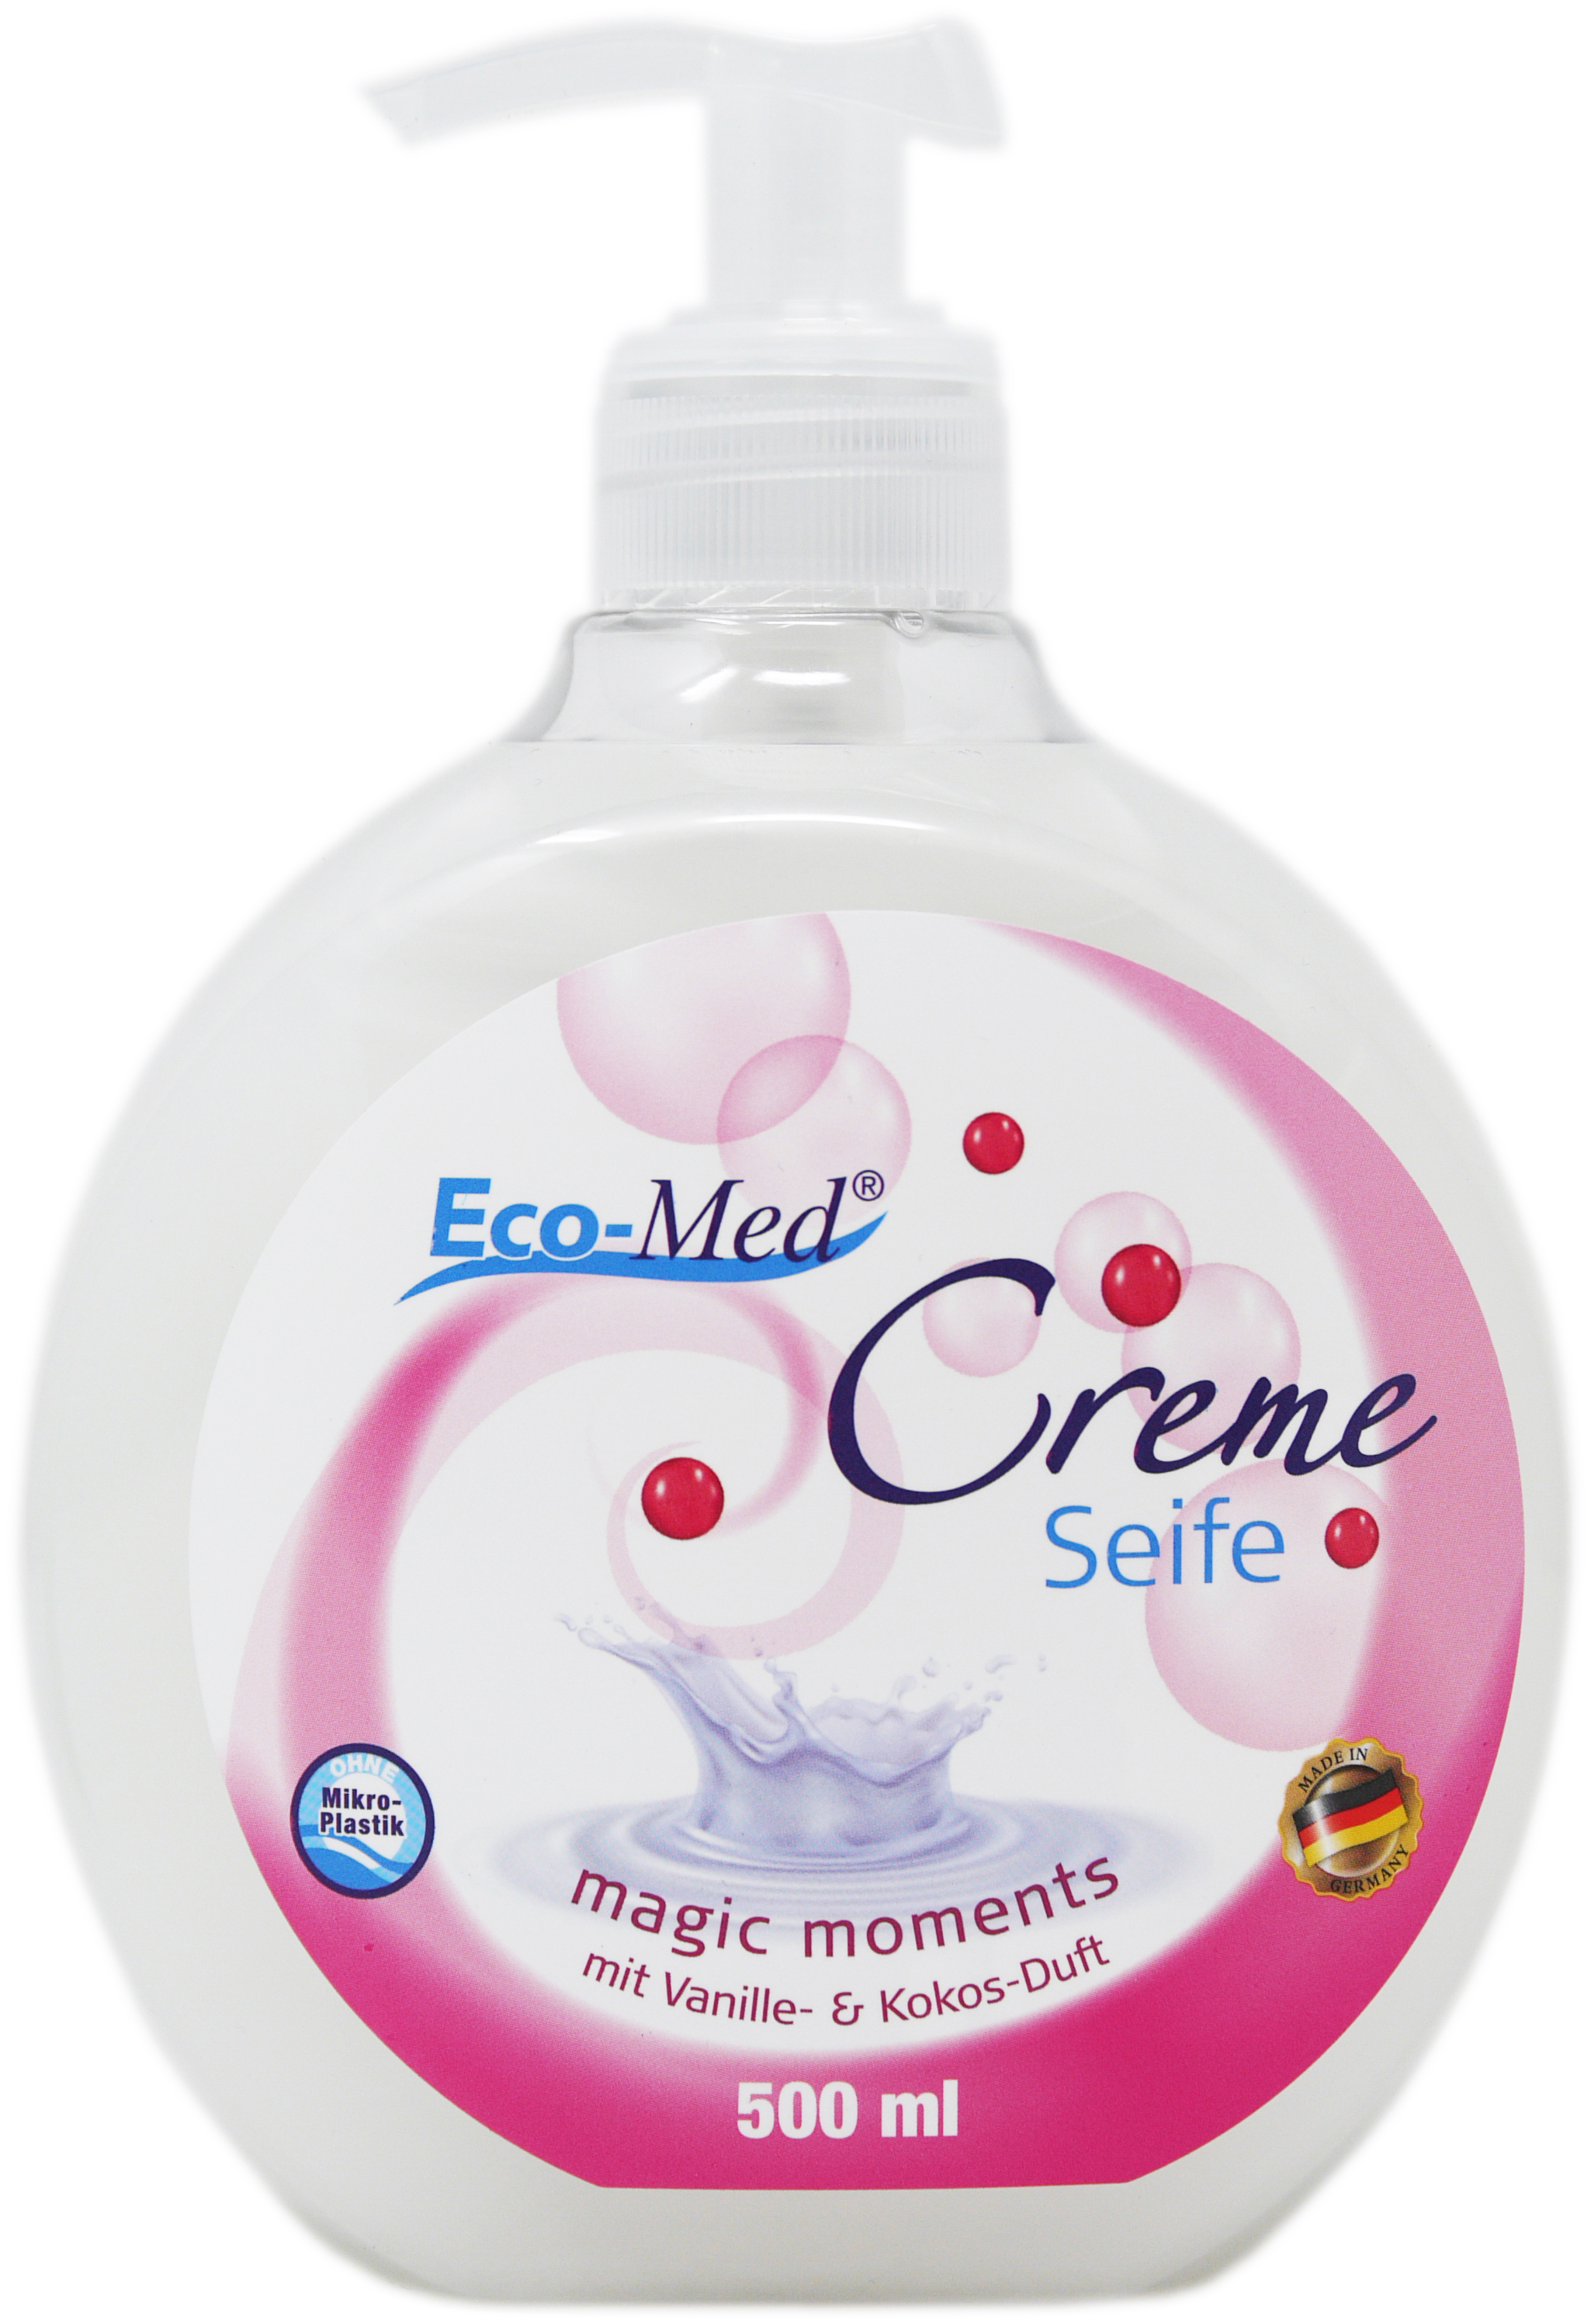 01623 - creamsoap 500 ml - magic moments - with vanilla & cocos fragrance